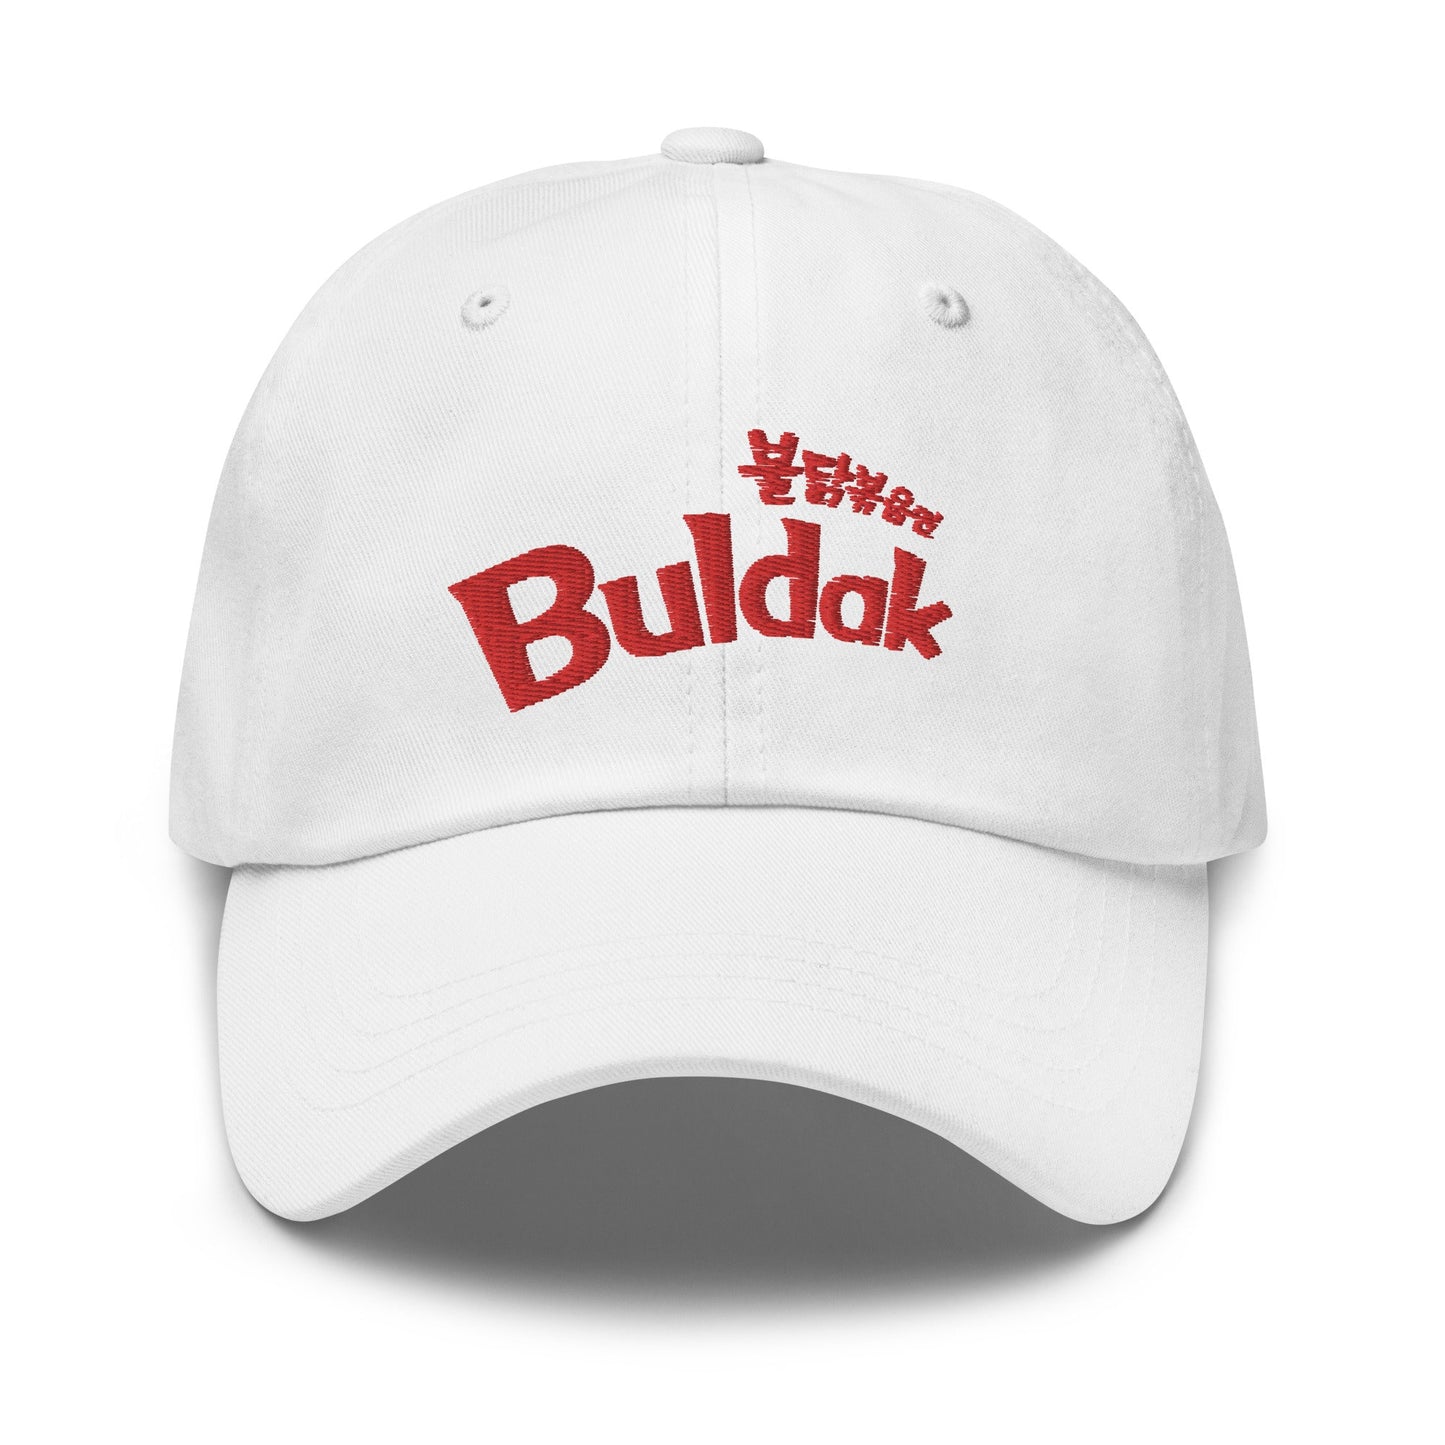 Buldak Ramen Hat - Send Spicy Noods - Korean Samyang Noodle Fans - Embroidered Cotton Baseball Cap - Multiple Colors